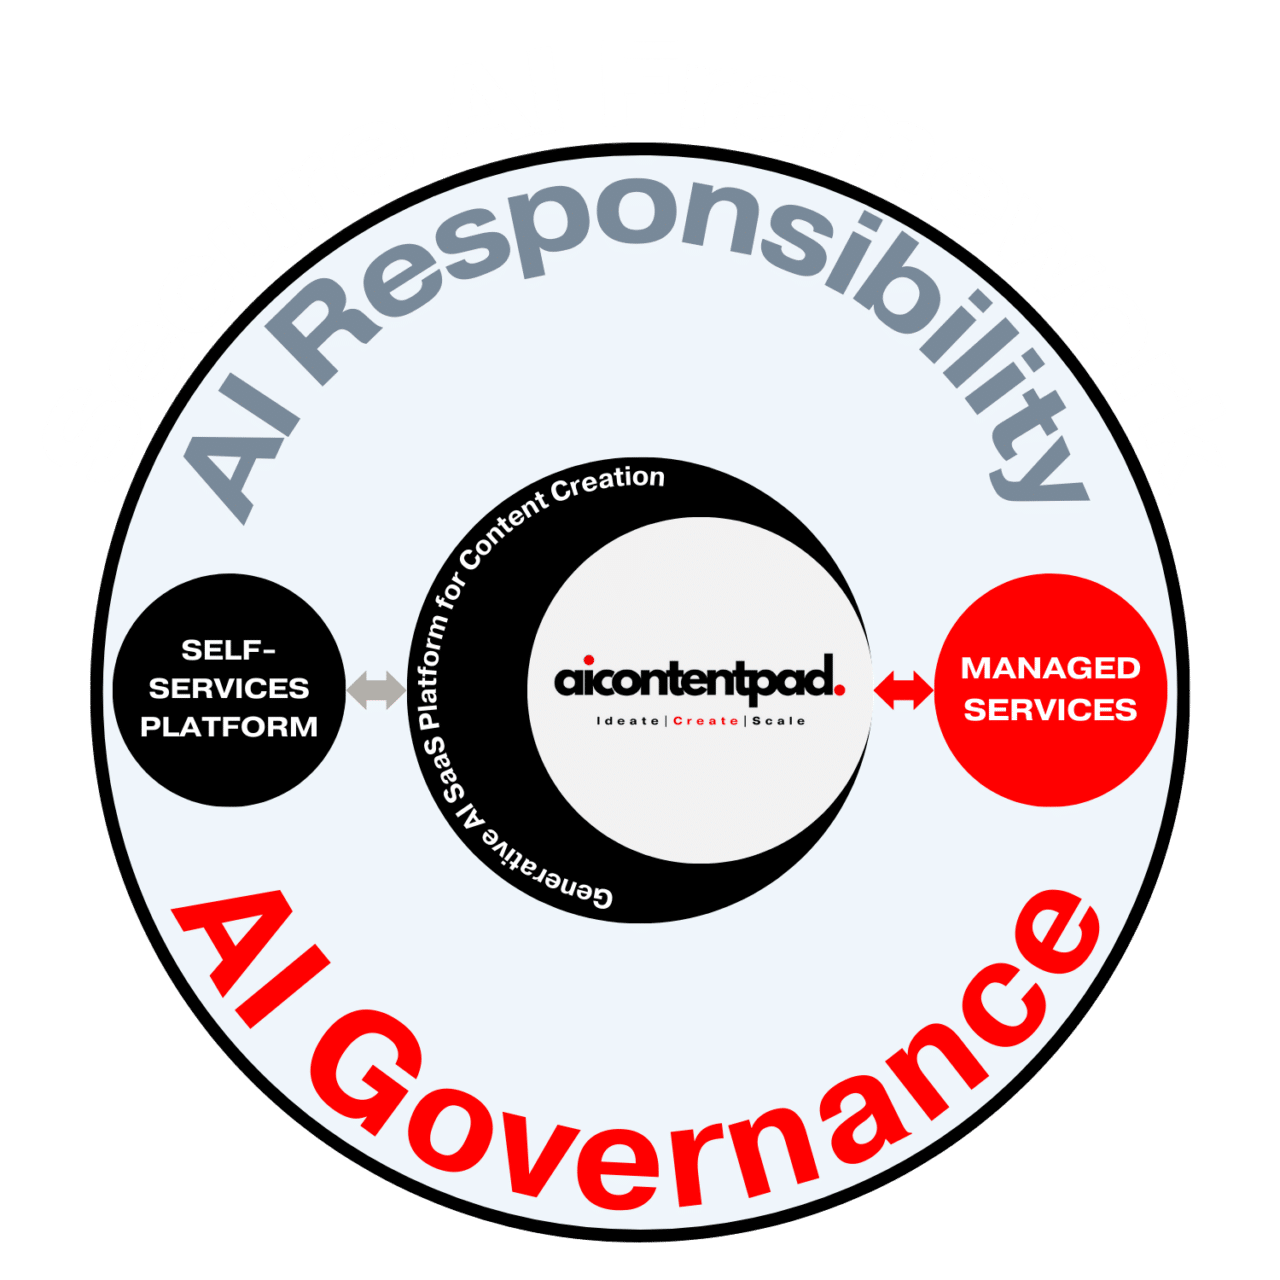 secure ai framework goverance